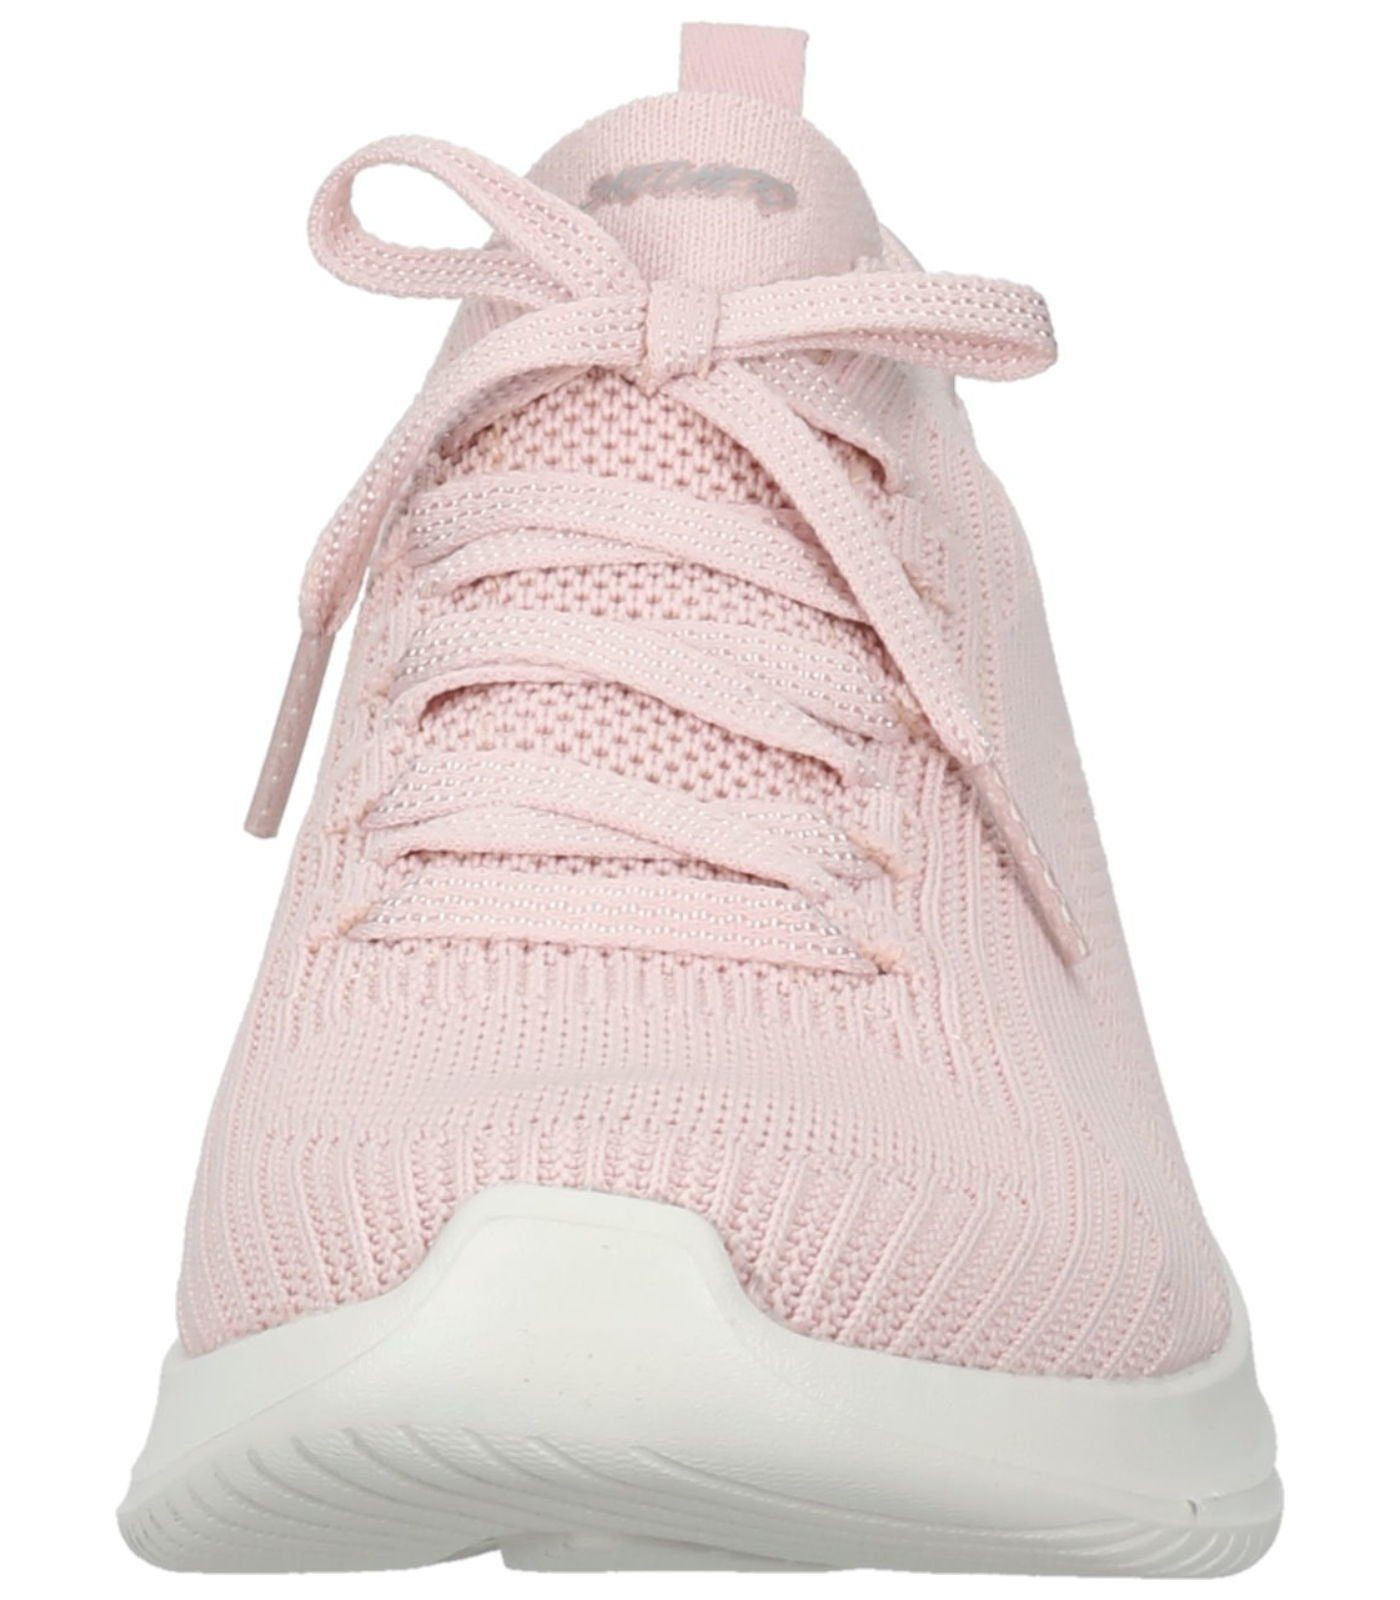 Textil Pink Sneaker Sneaker Skechers